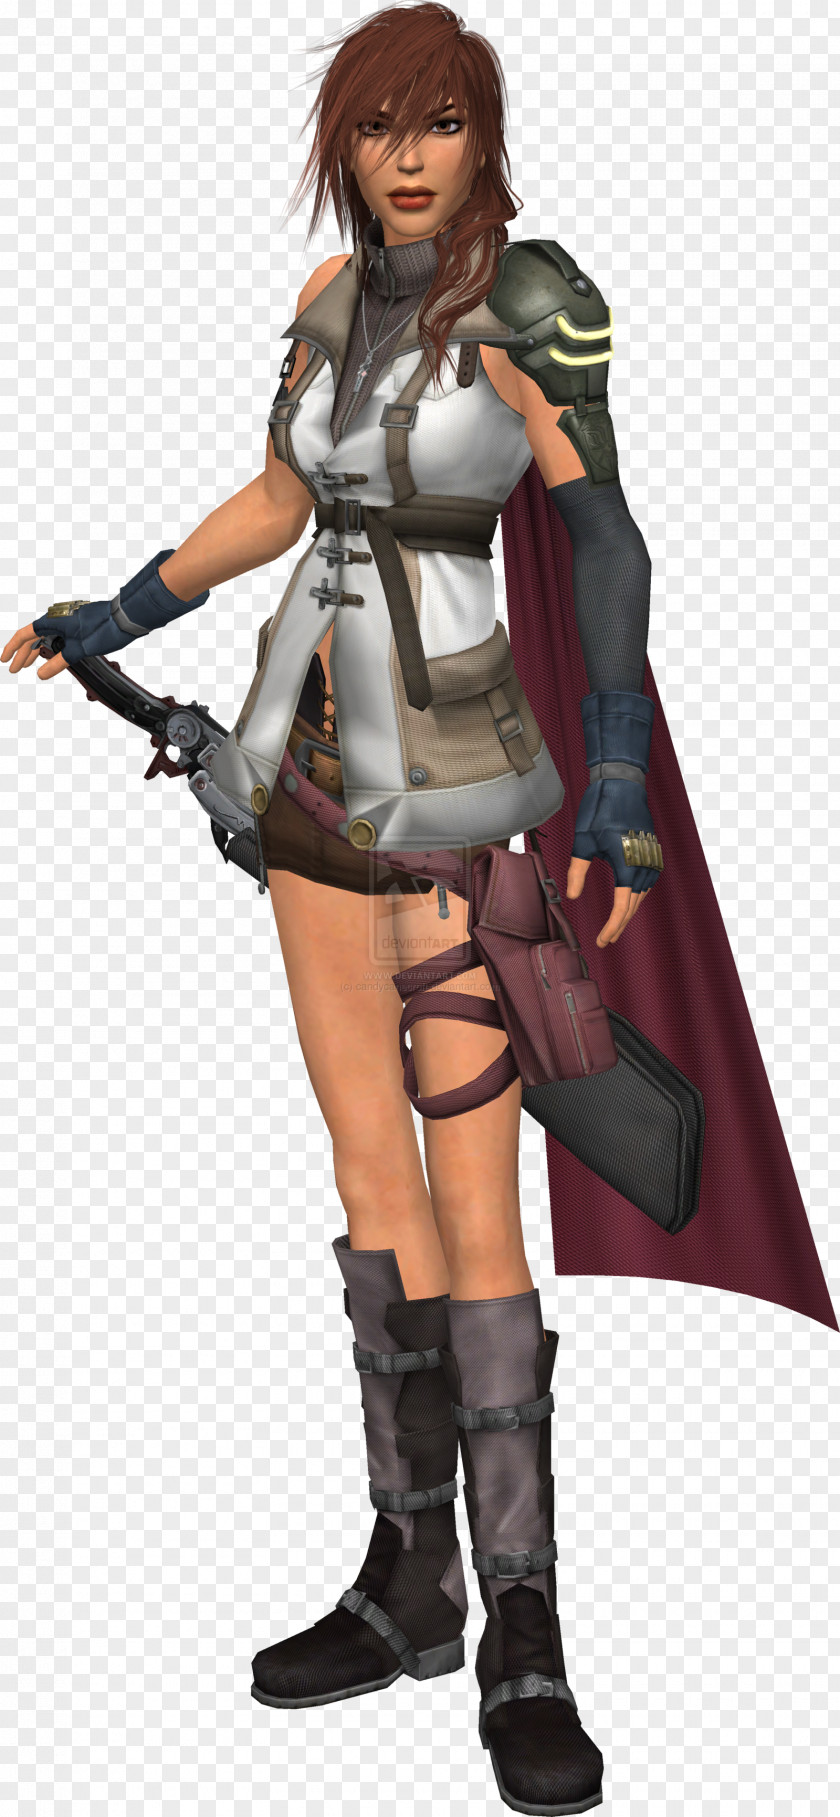 Lara Croft The Woman Warrior Costume Design Armour Lance PNG